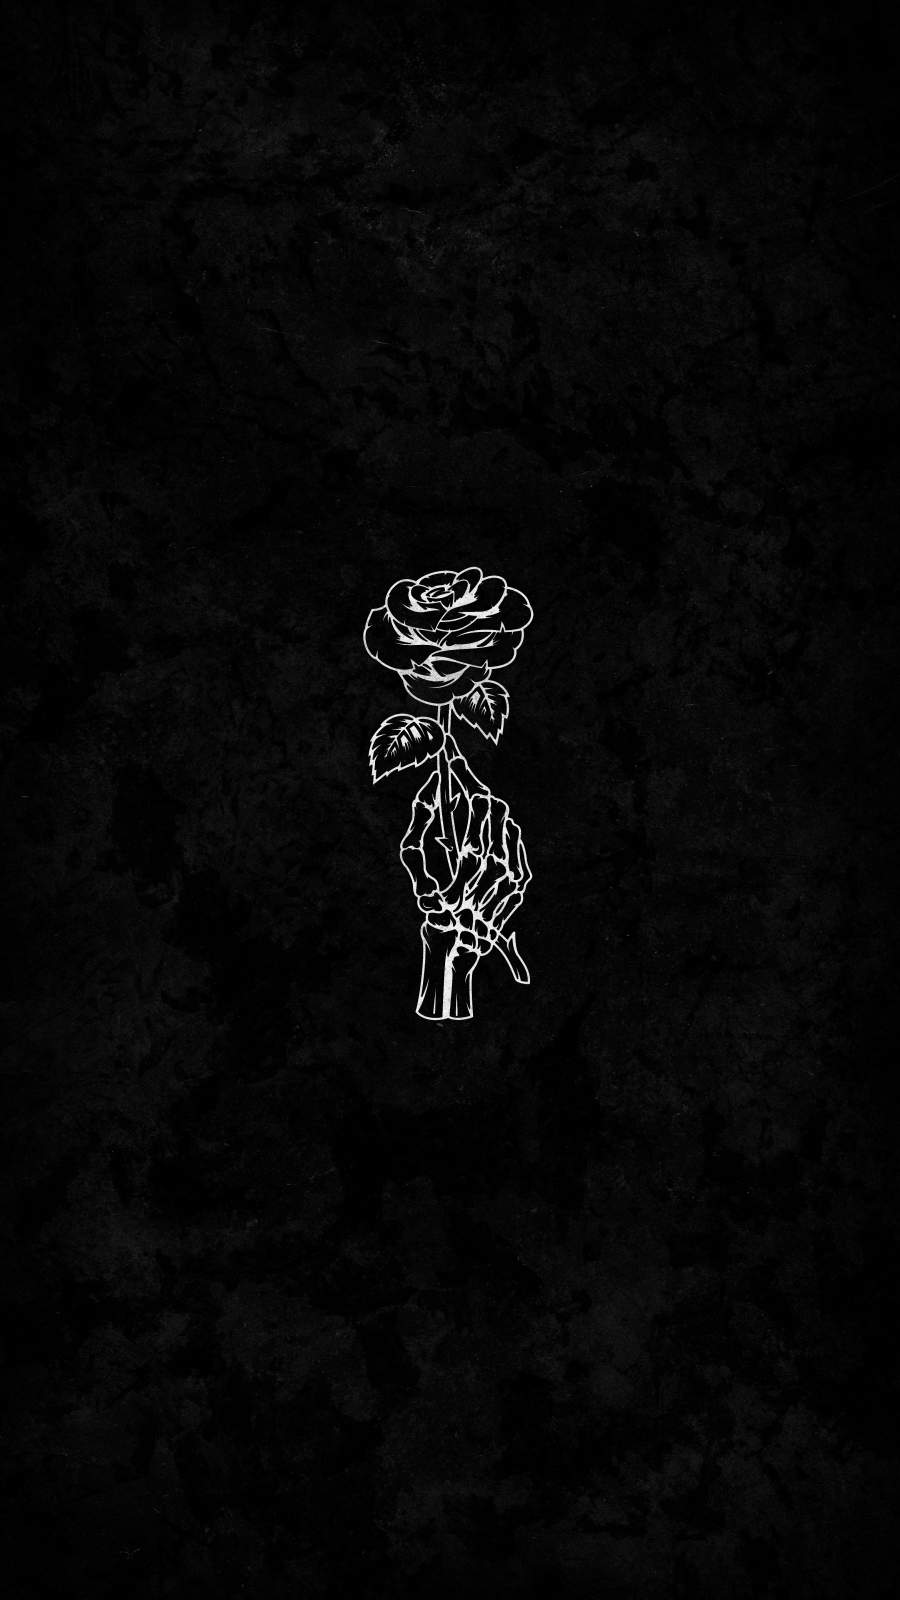 Wallpaper Black Skull Skeleton Human Skull Skull and Crossbones Black  Background  Download Free Image